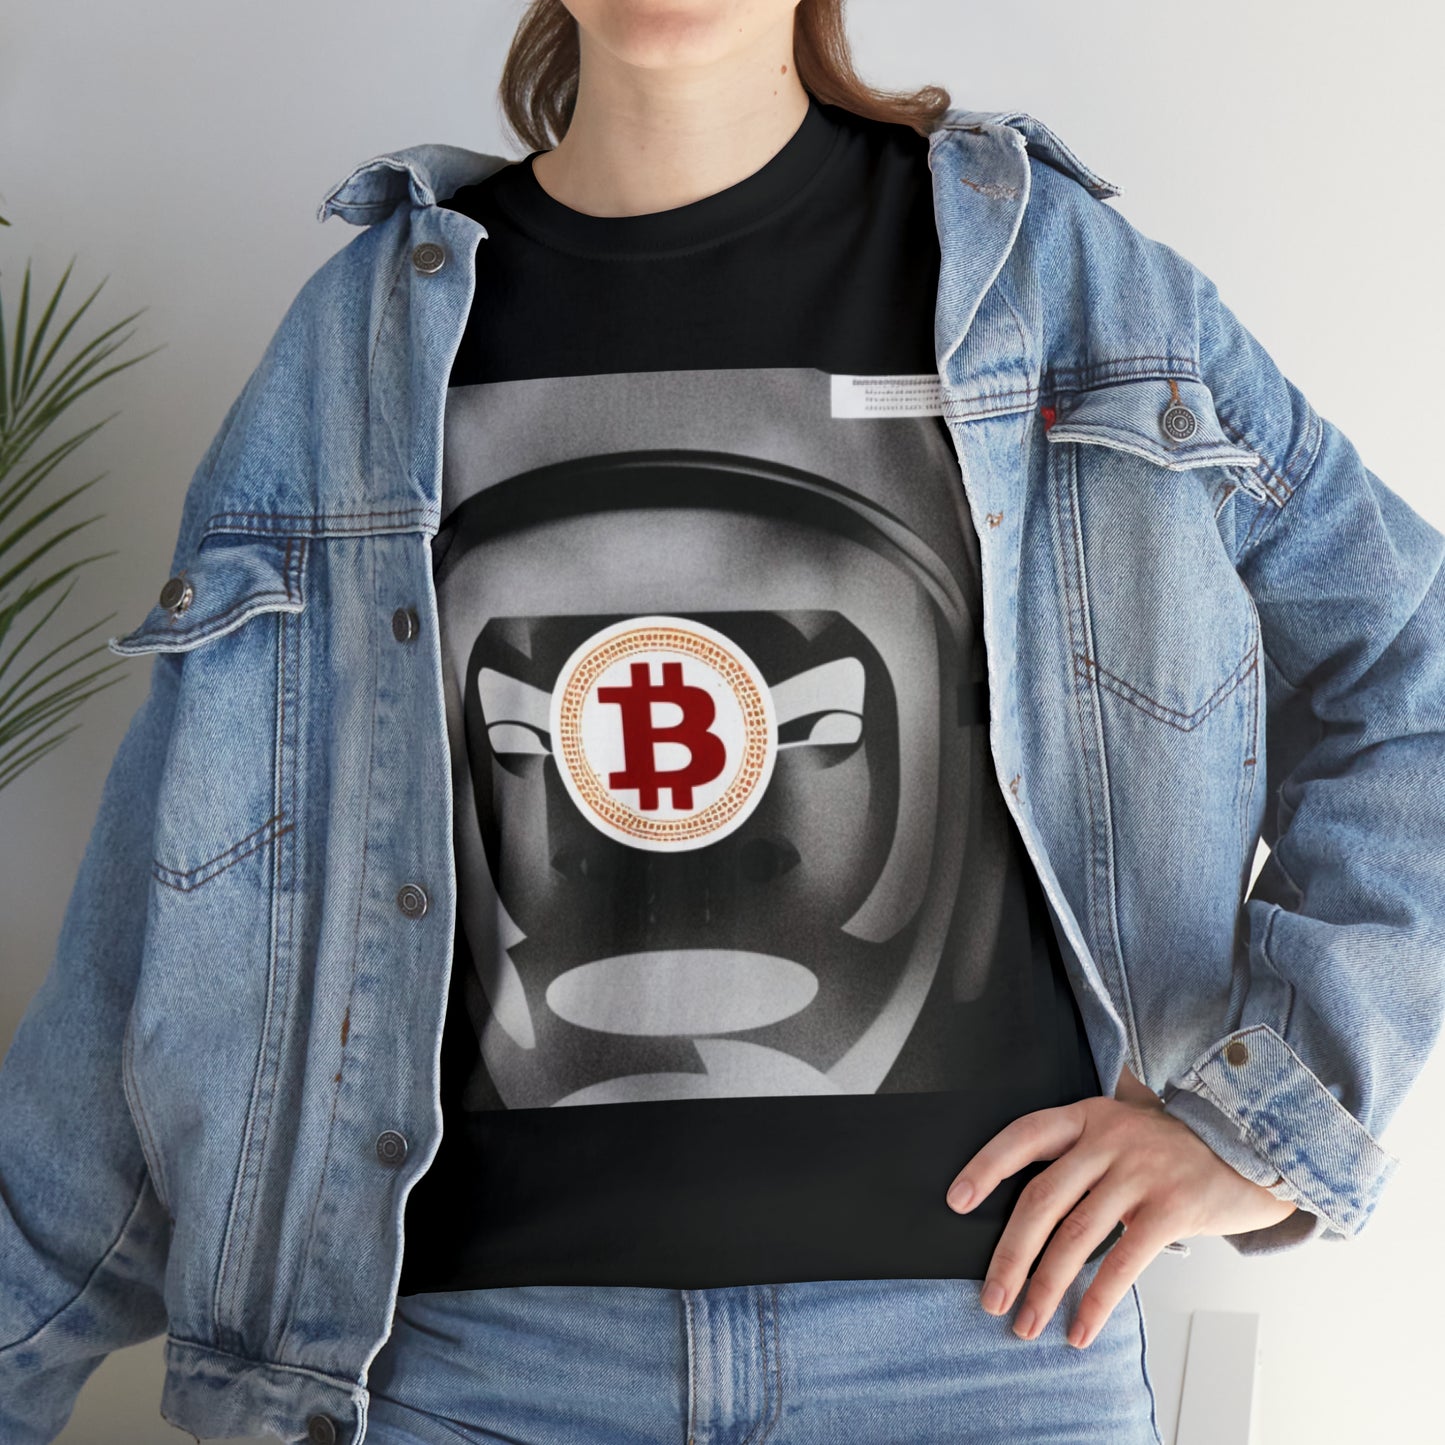 Bitcoin’s Dystopian Echoes